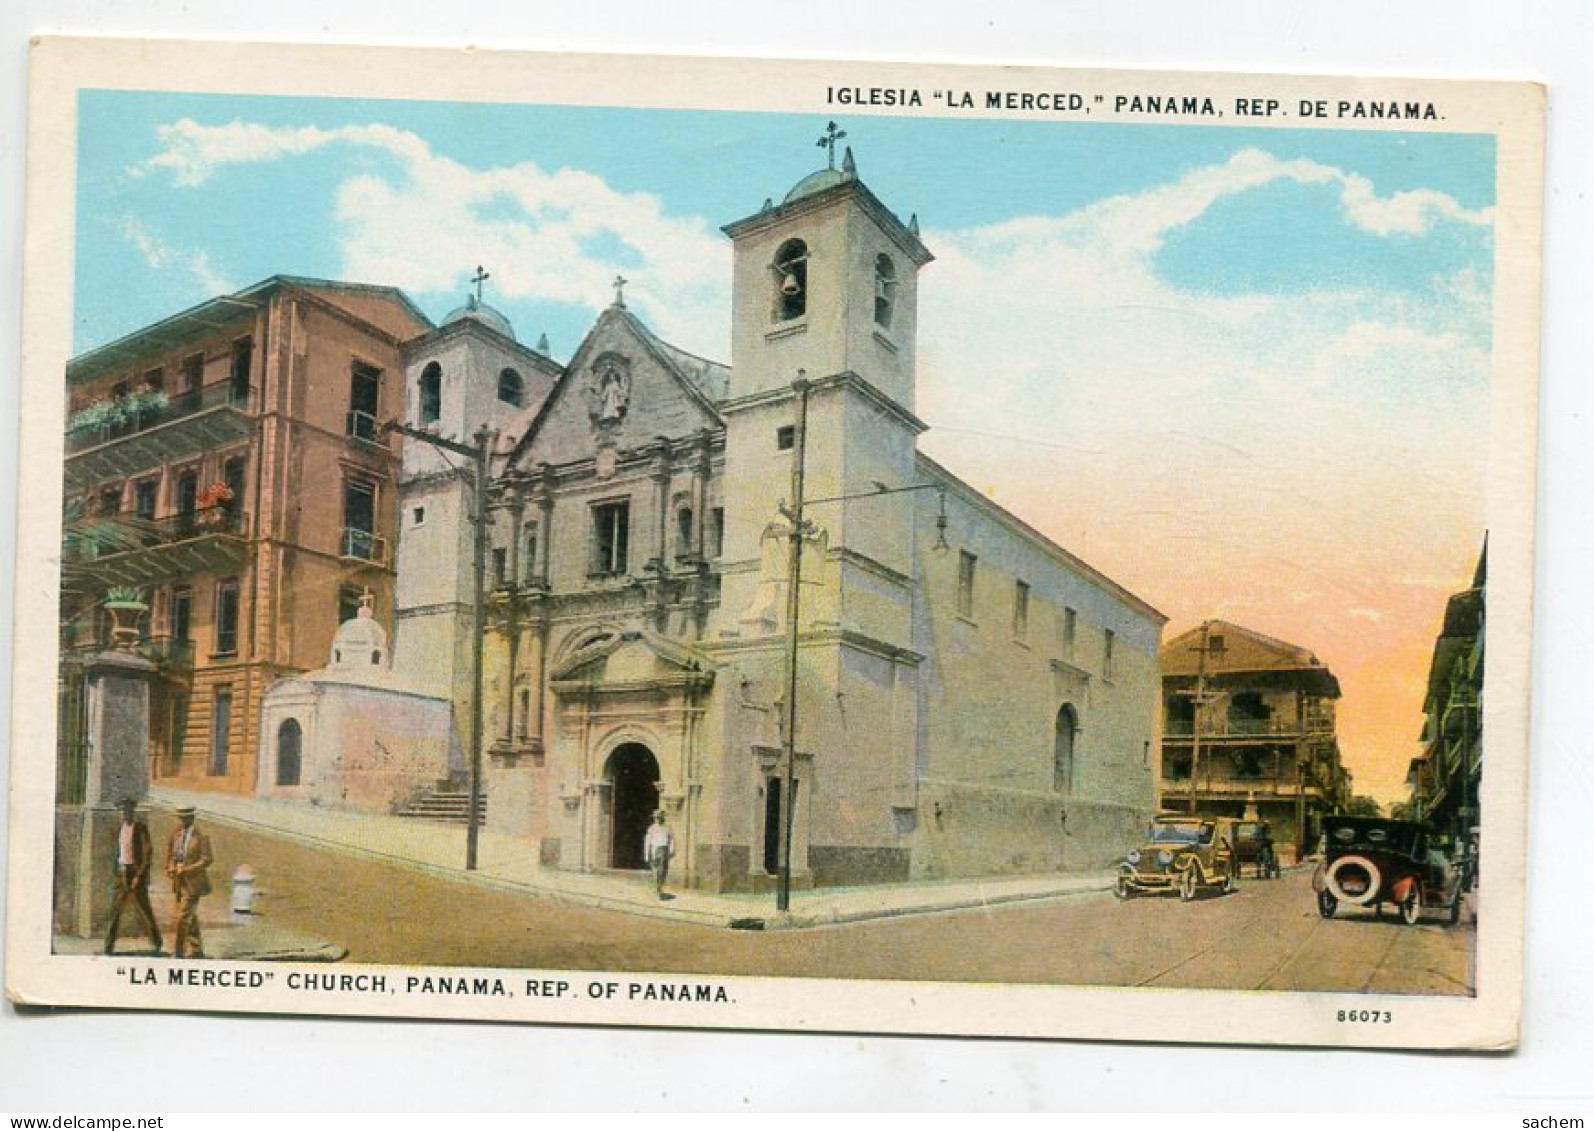 PANAMA Eglise La Perced Place Automobiles 1930   D20  2021 - Panama